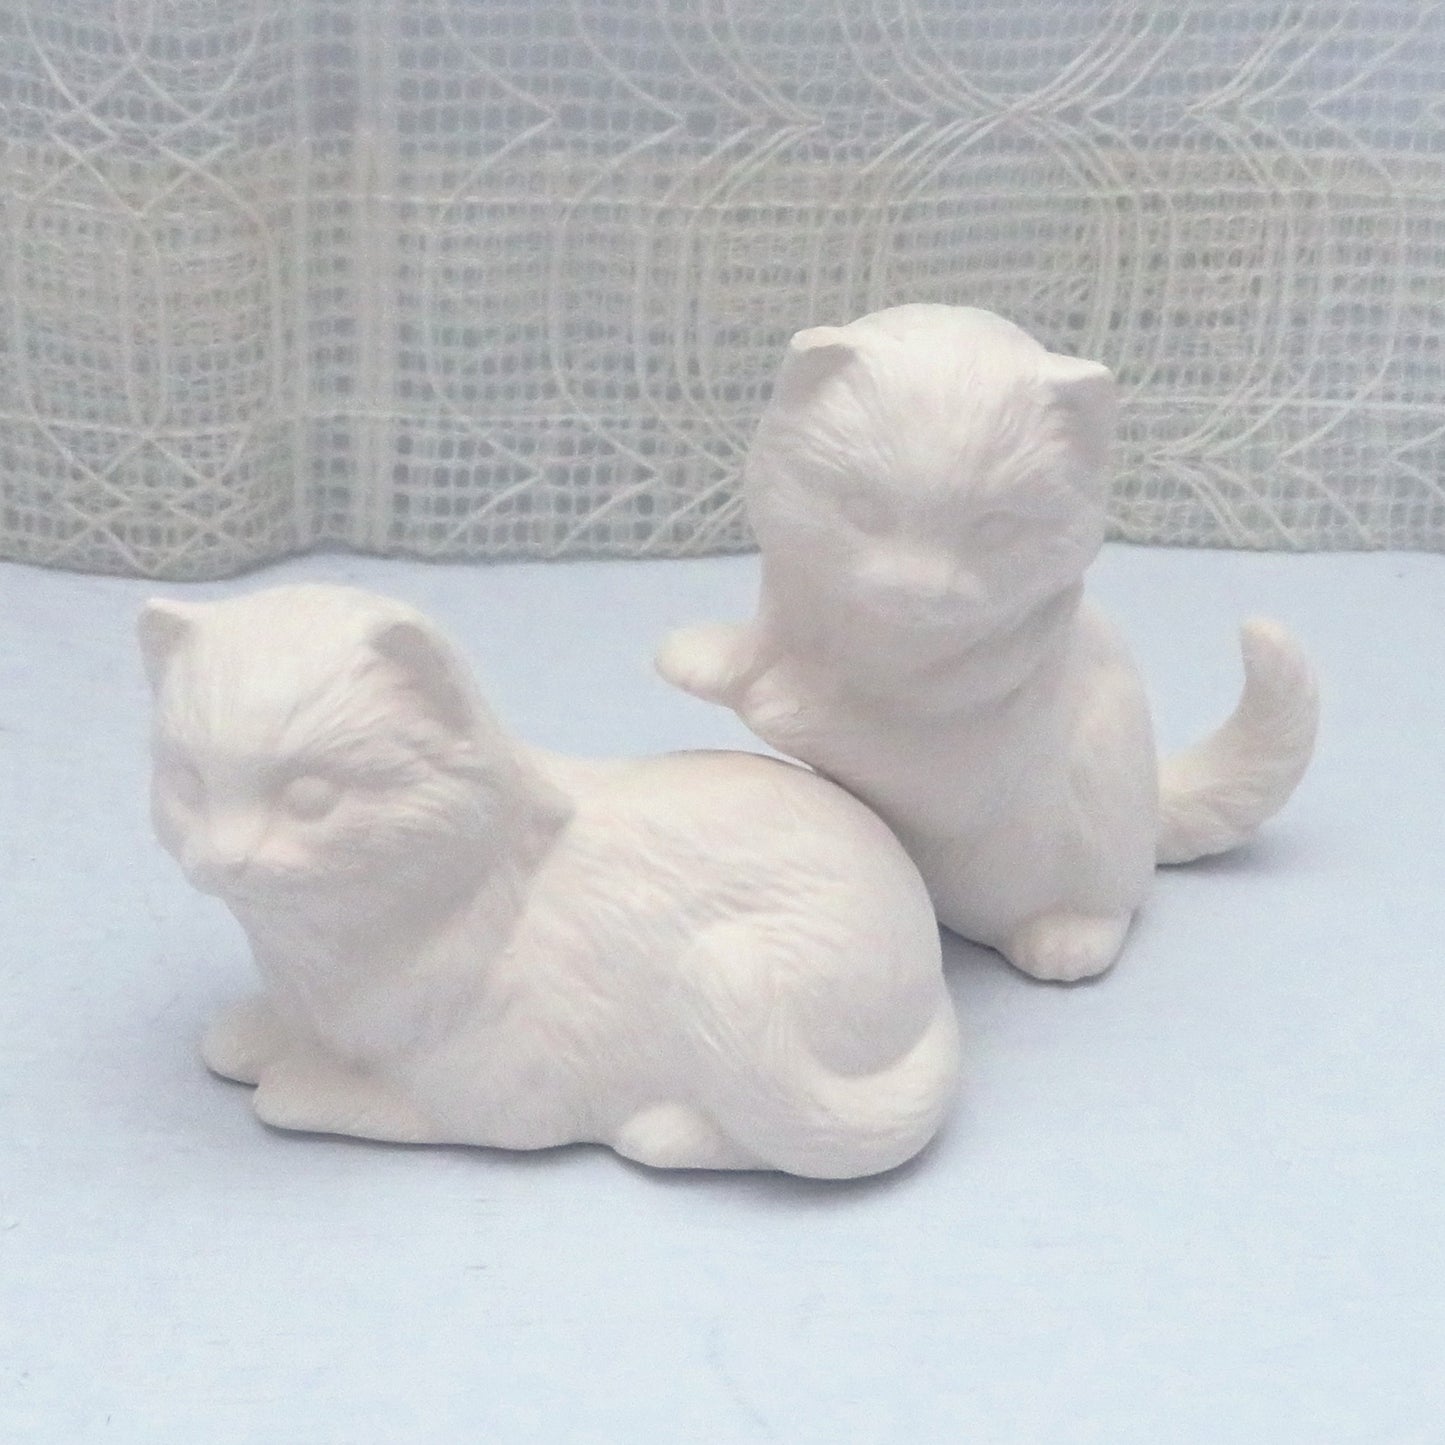 Handmade Ready to Paint Ceramic Cat Figurine / Cat Statue / Ceramics to Paint / Bisque Ware / Ceramic Bisque / Paintable Ceramics /Cat Gift